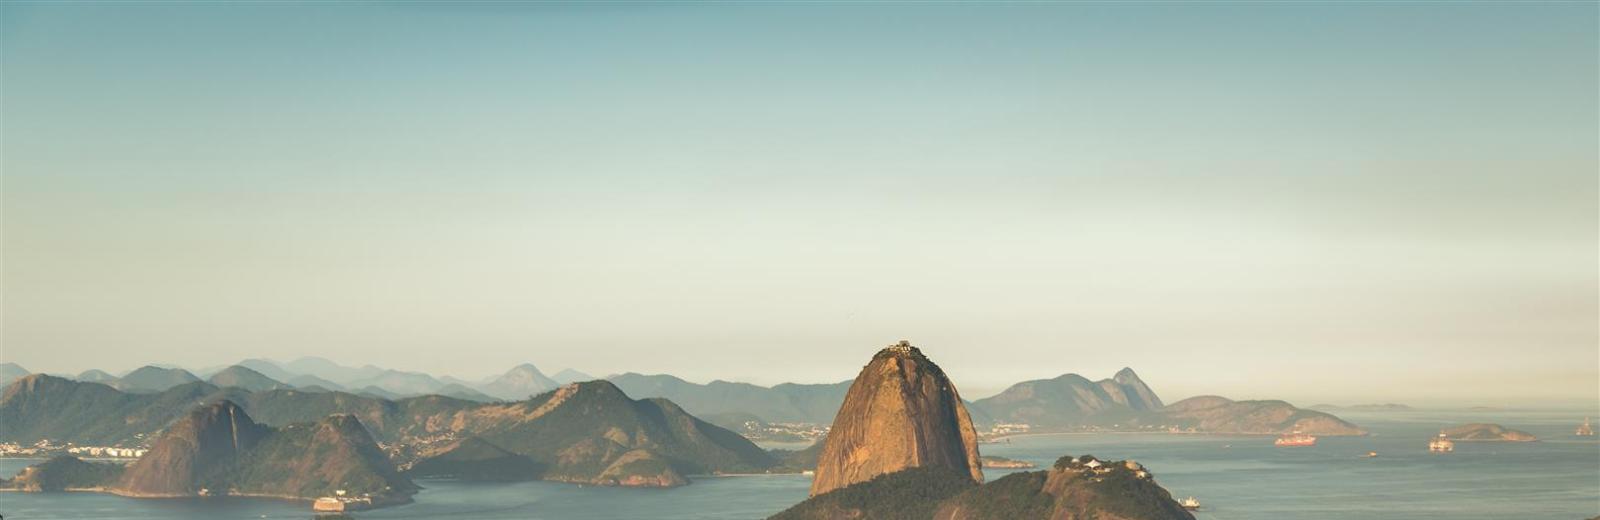 OMEGA e Viva Rio